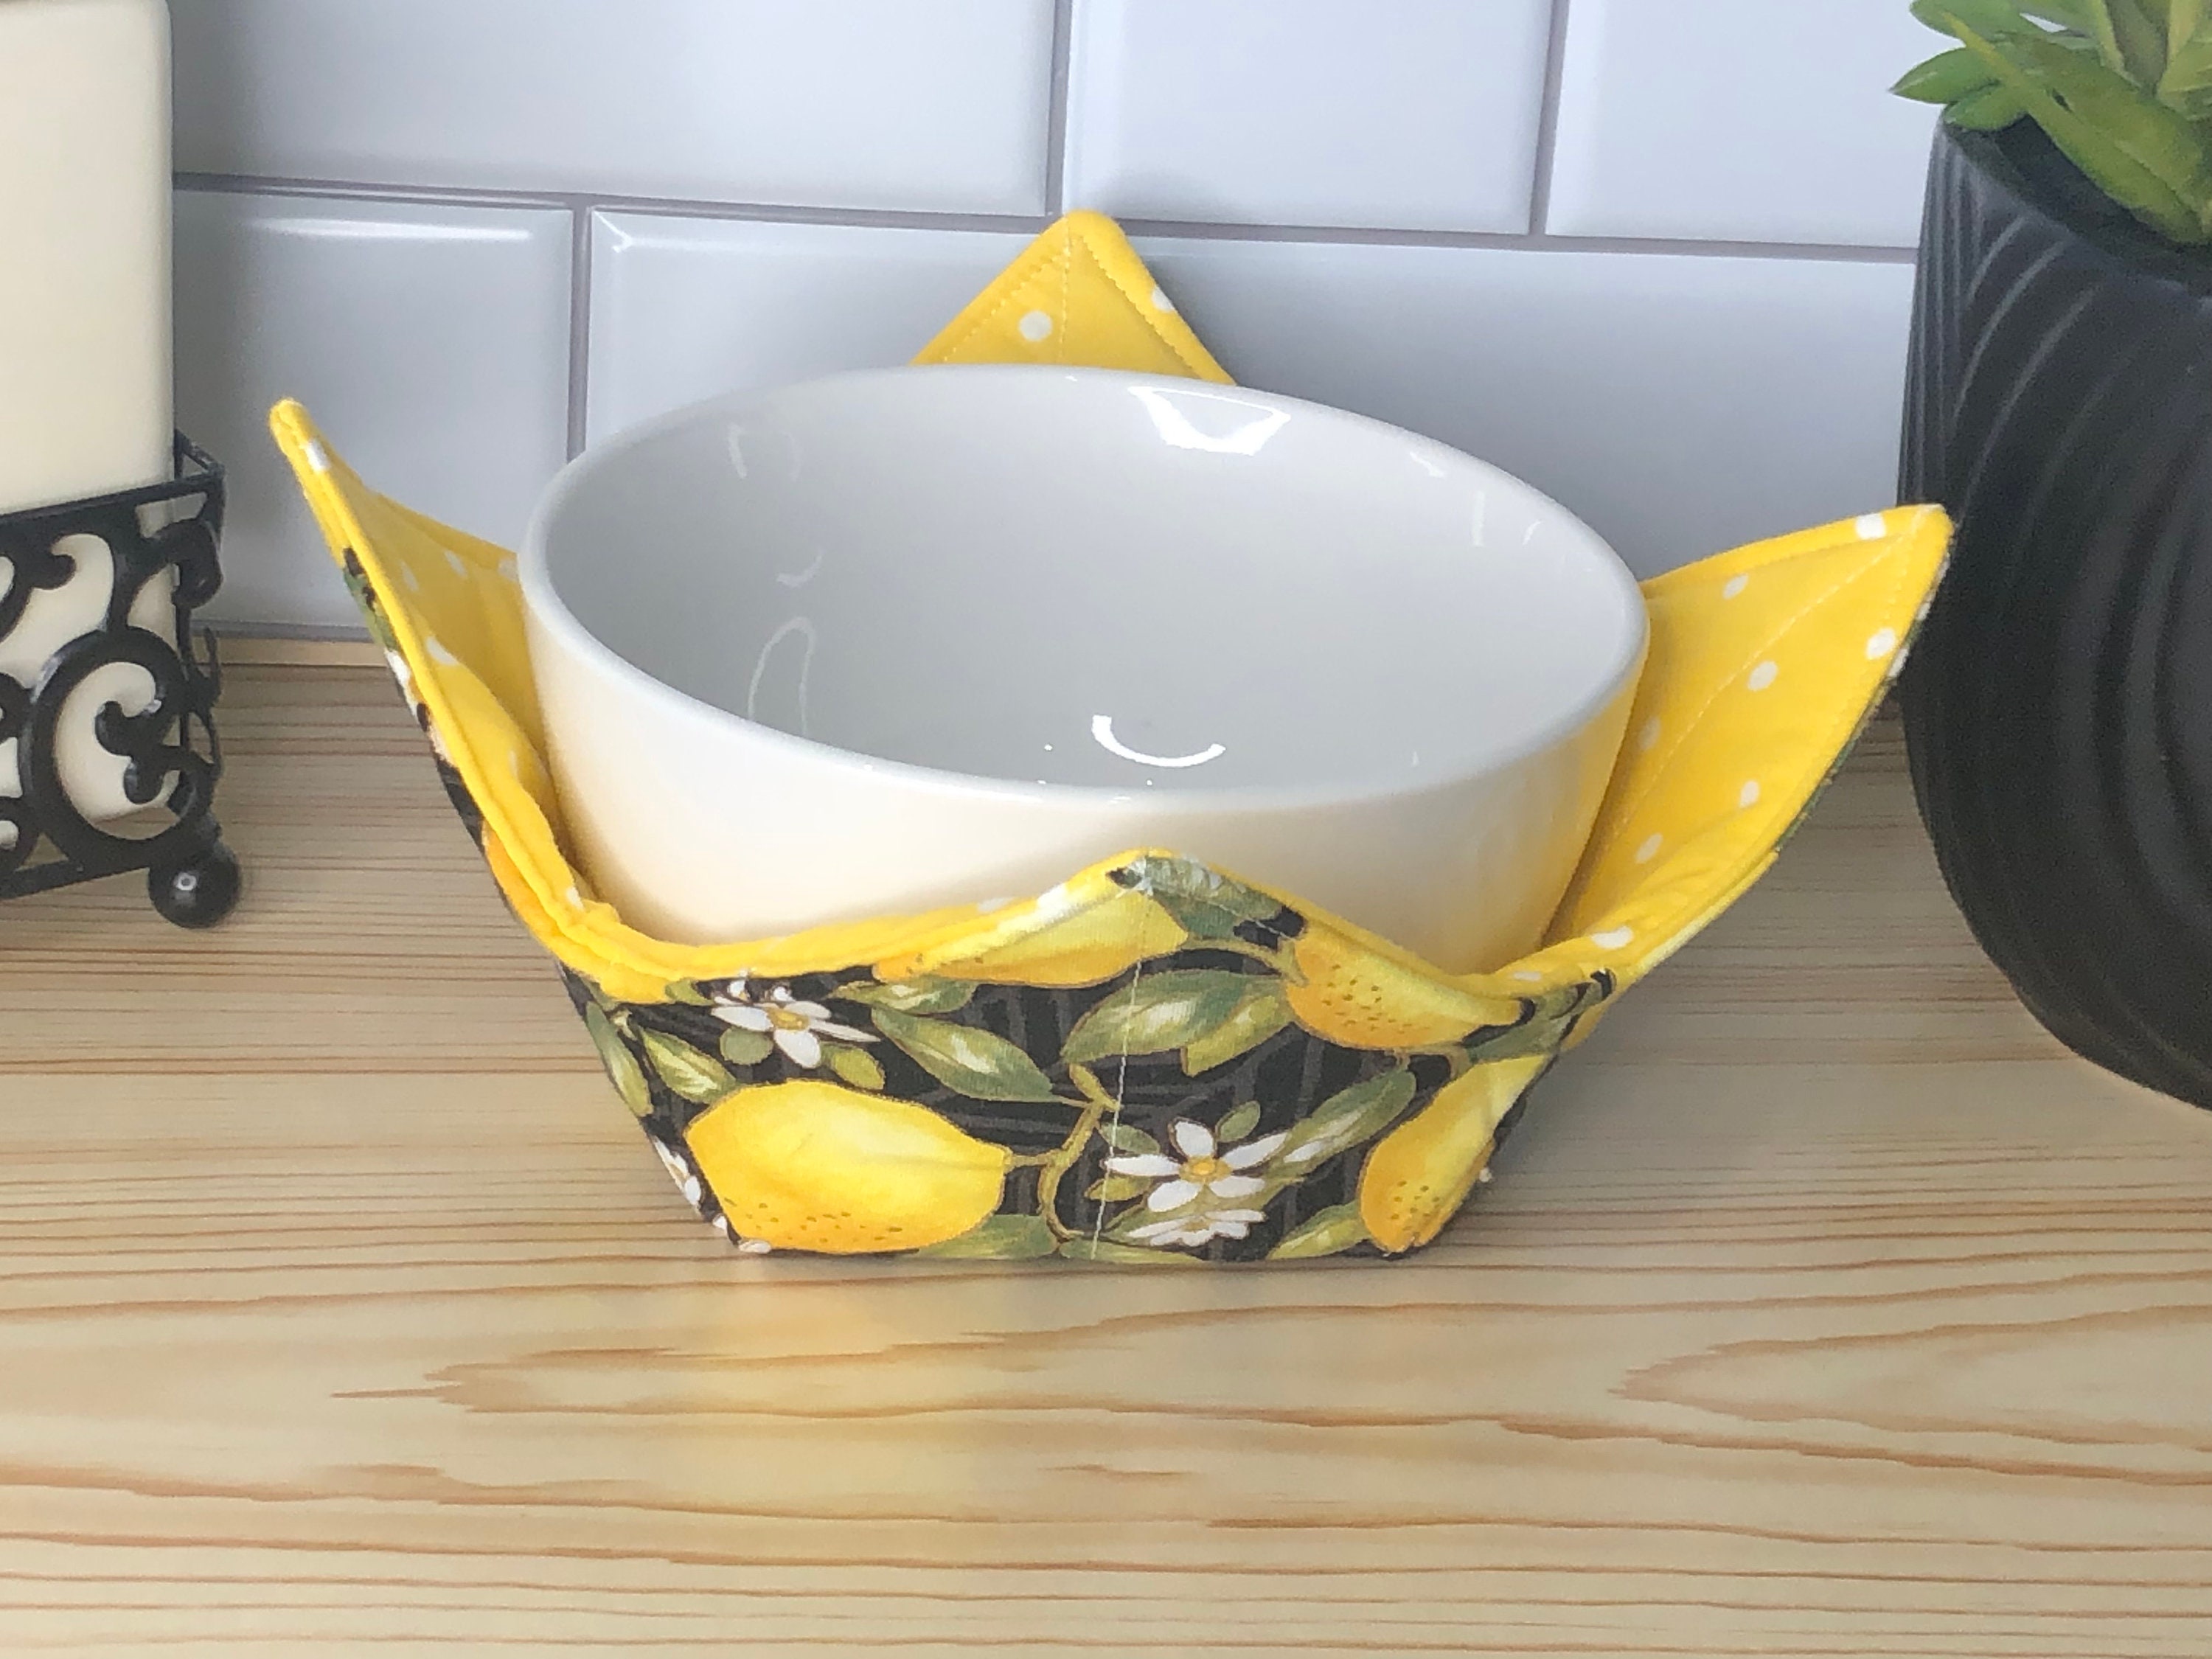 Bowl Cozy Microwavable Soup Bowl Cozy pot holder fabric Bowl